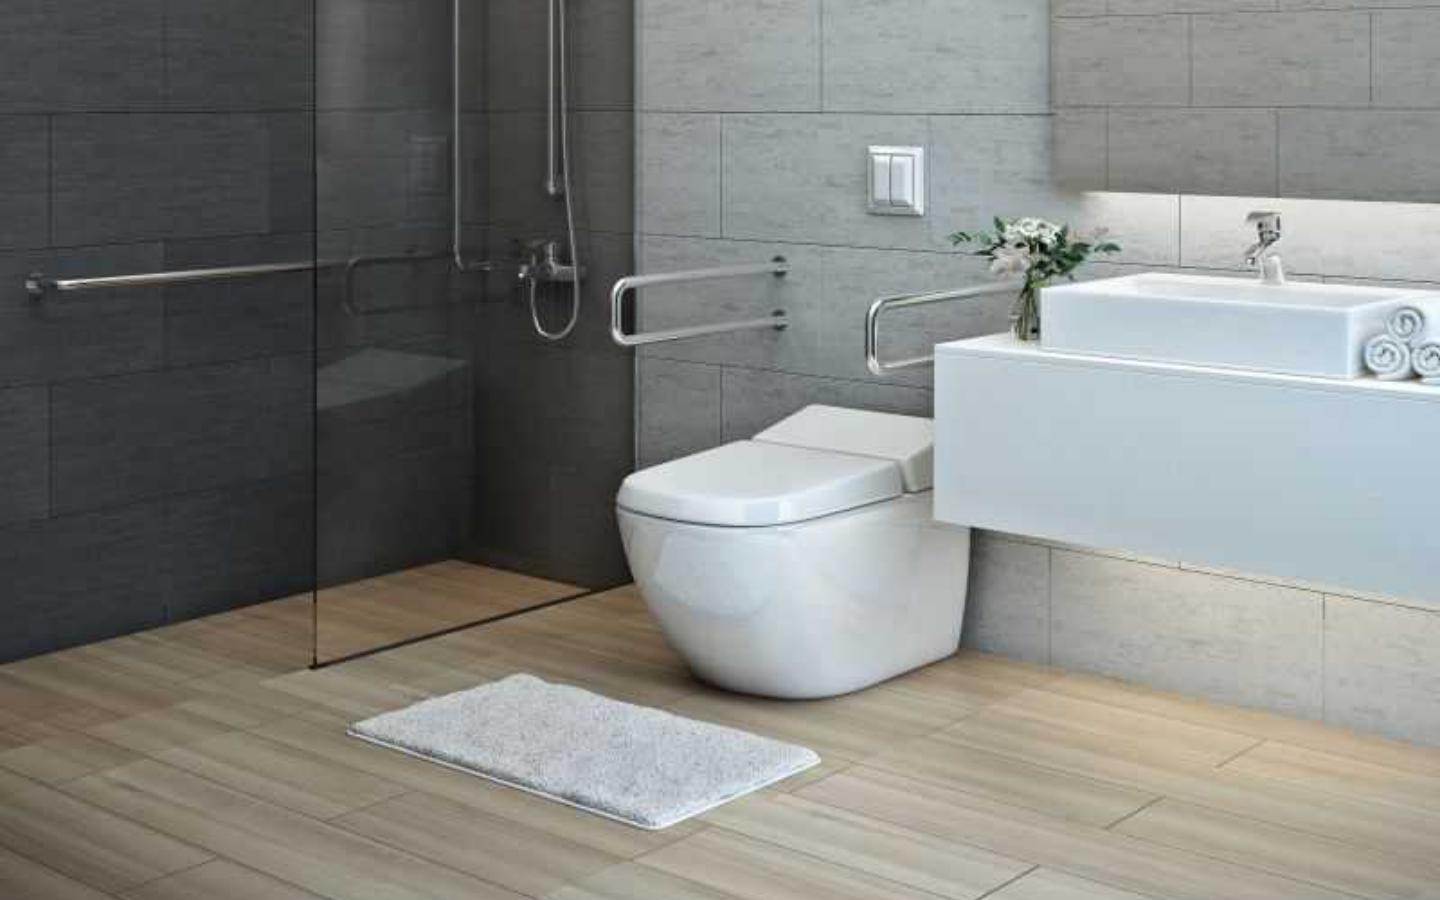 Handicap Bathrooms and Showers in houston